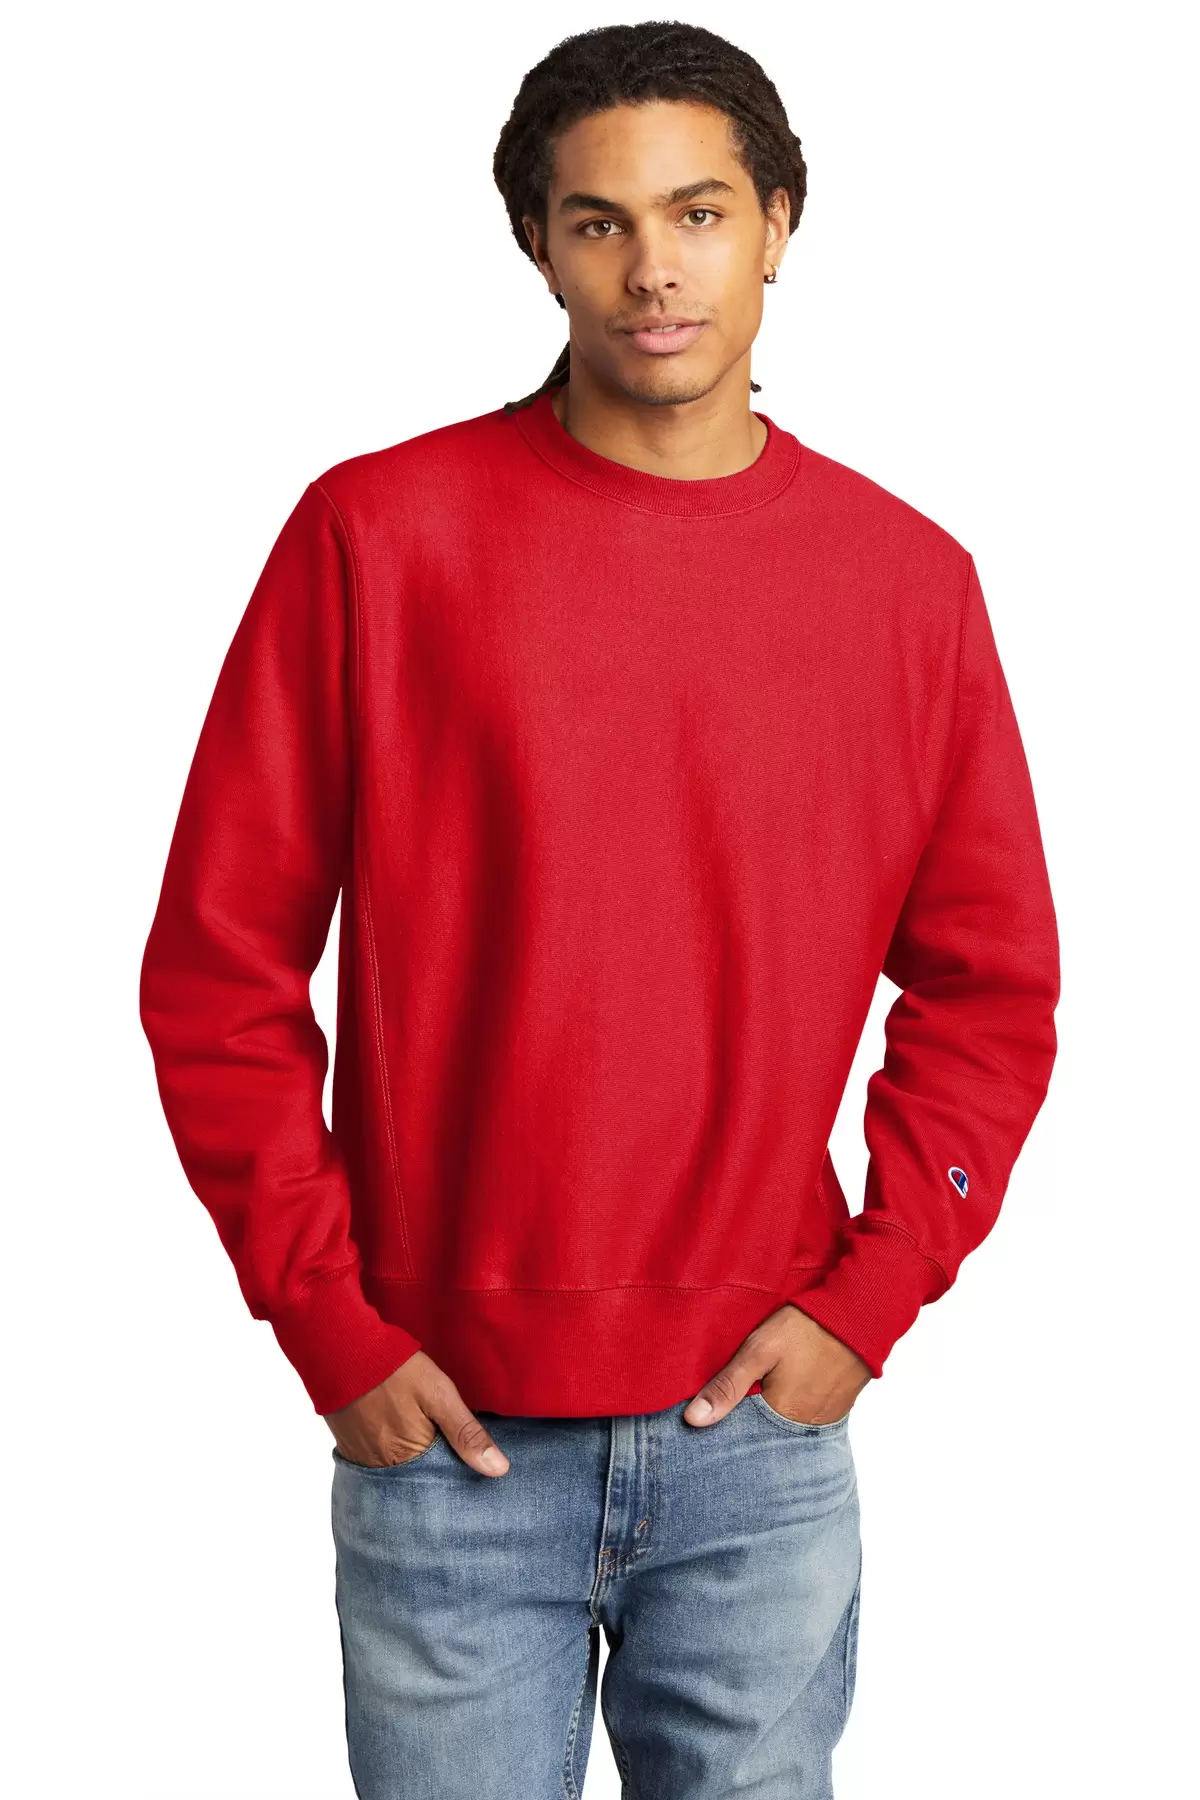 Champion S1049 Pullover Sweatshirt - From $26.31